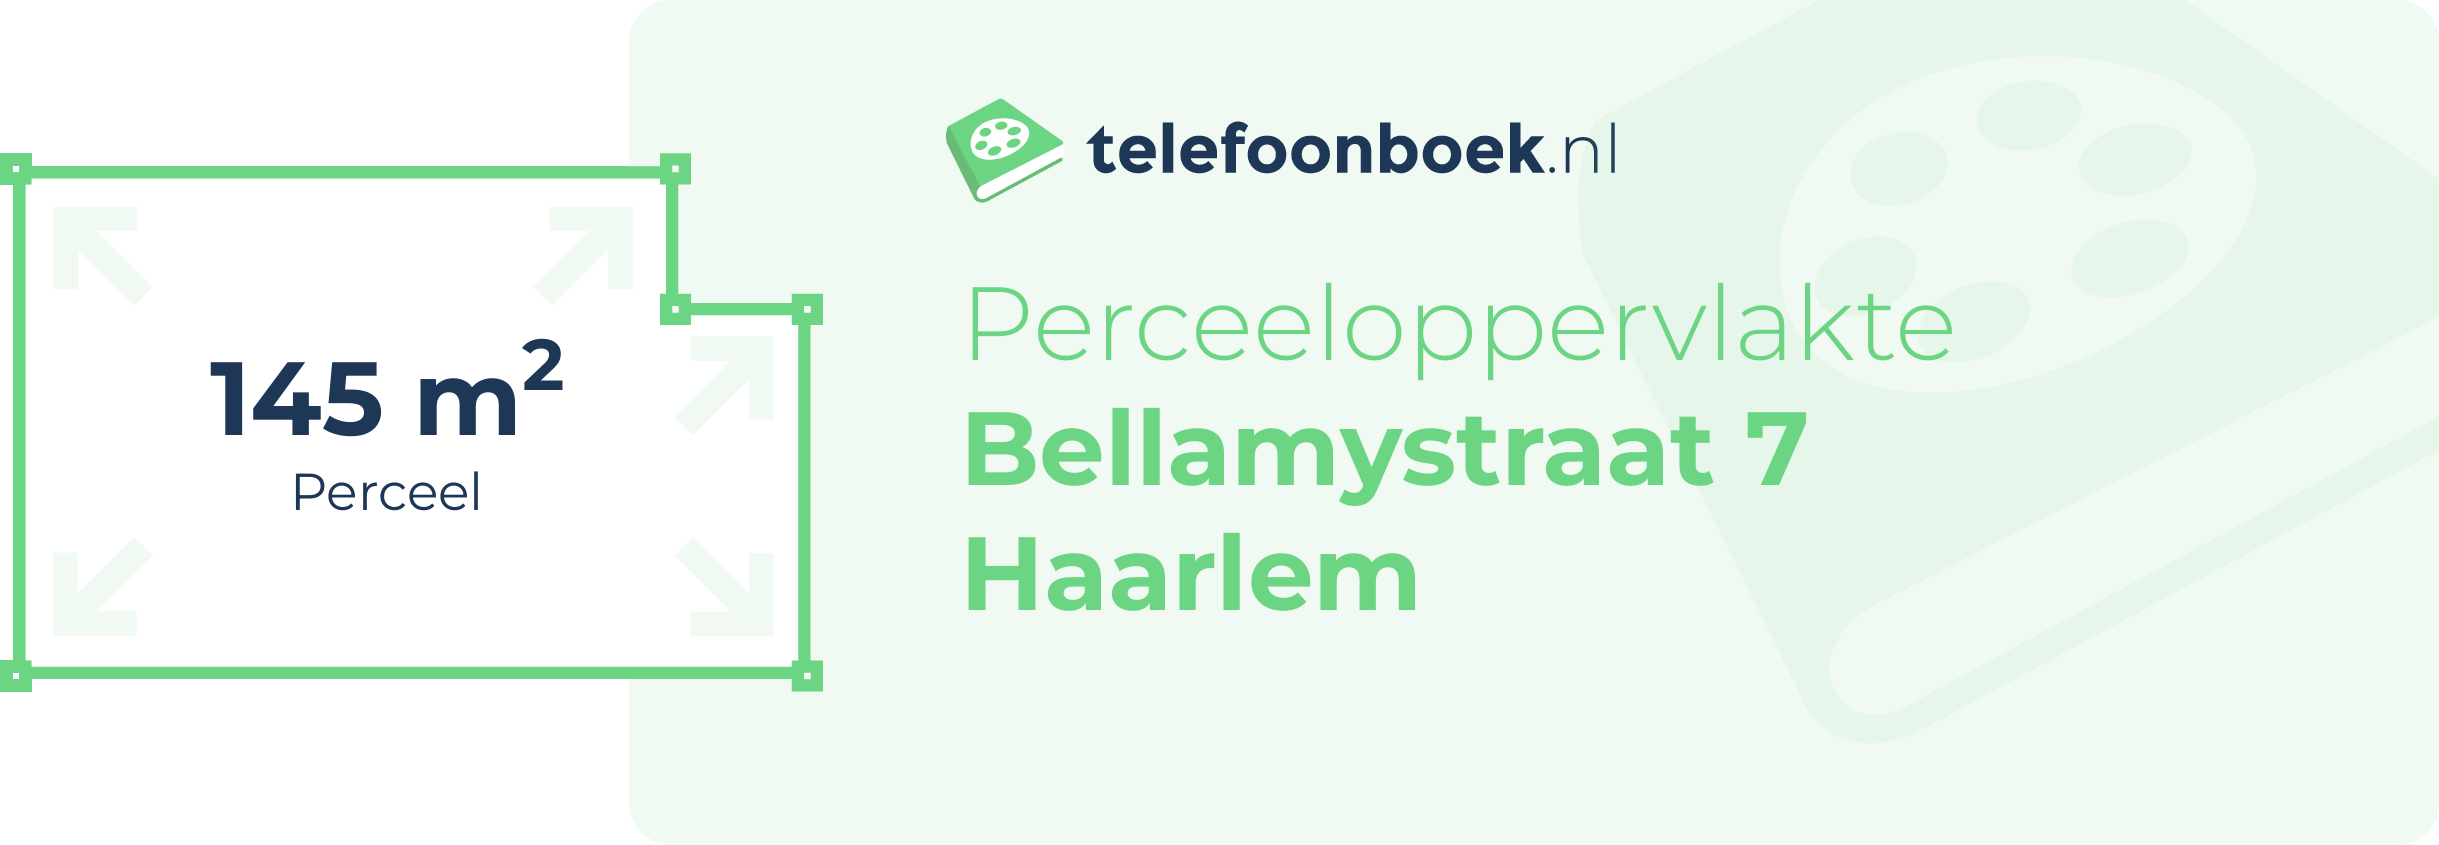 Perceeloppervlakte Bellamystraat 7 Haarlem